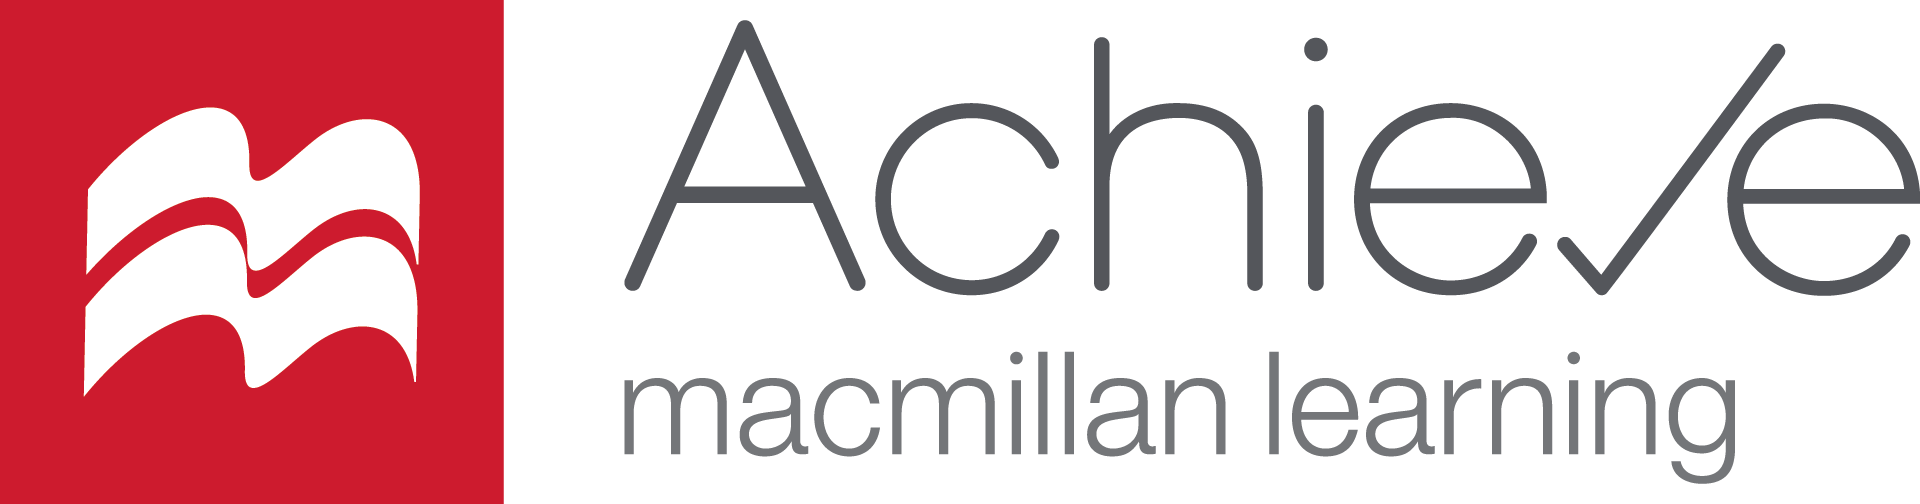 Logo of Achieve, Macmillan Learning